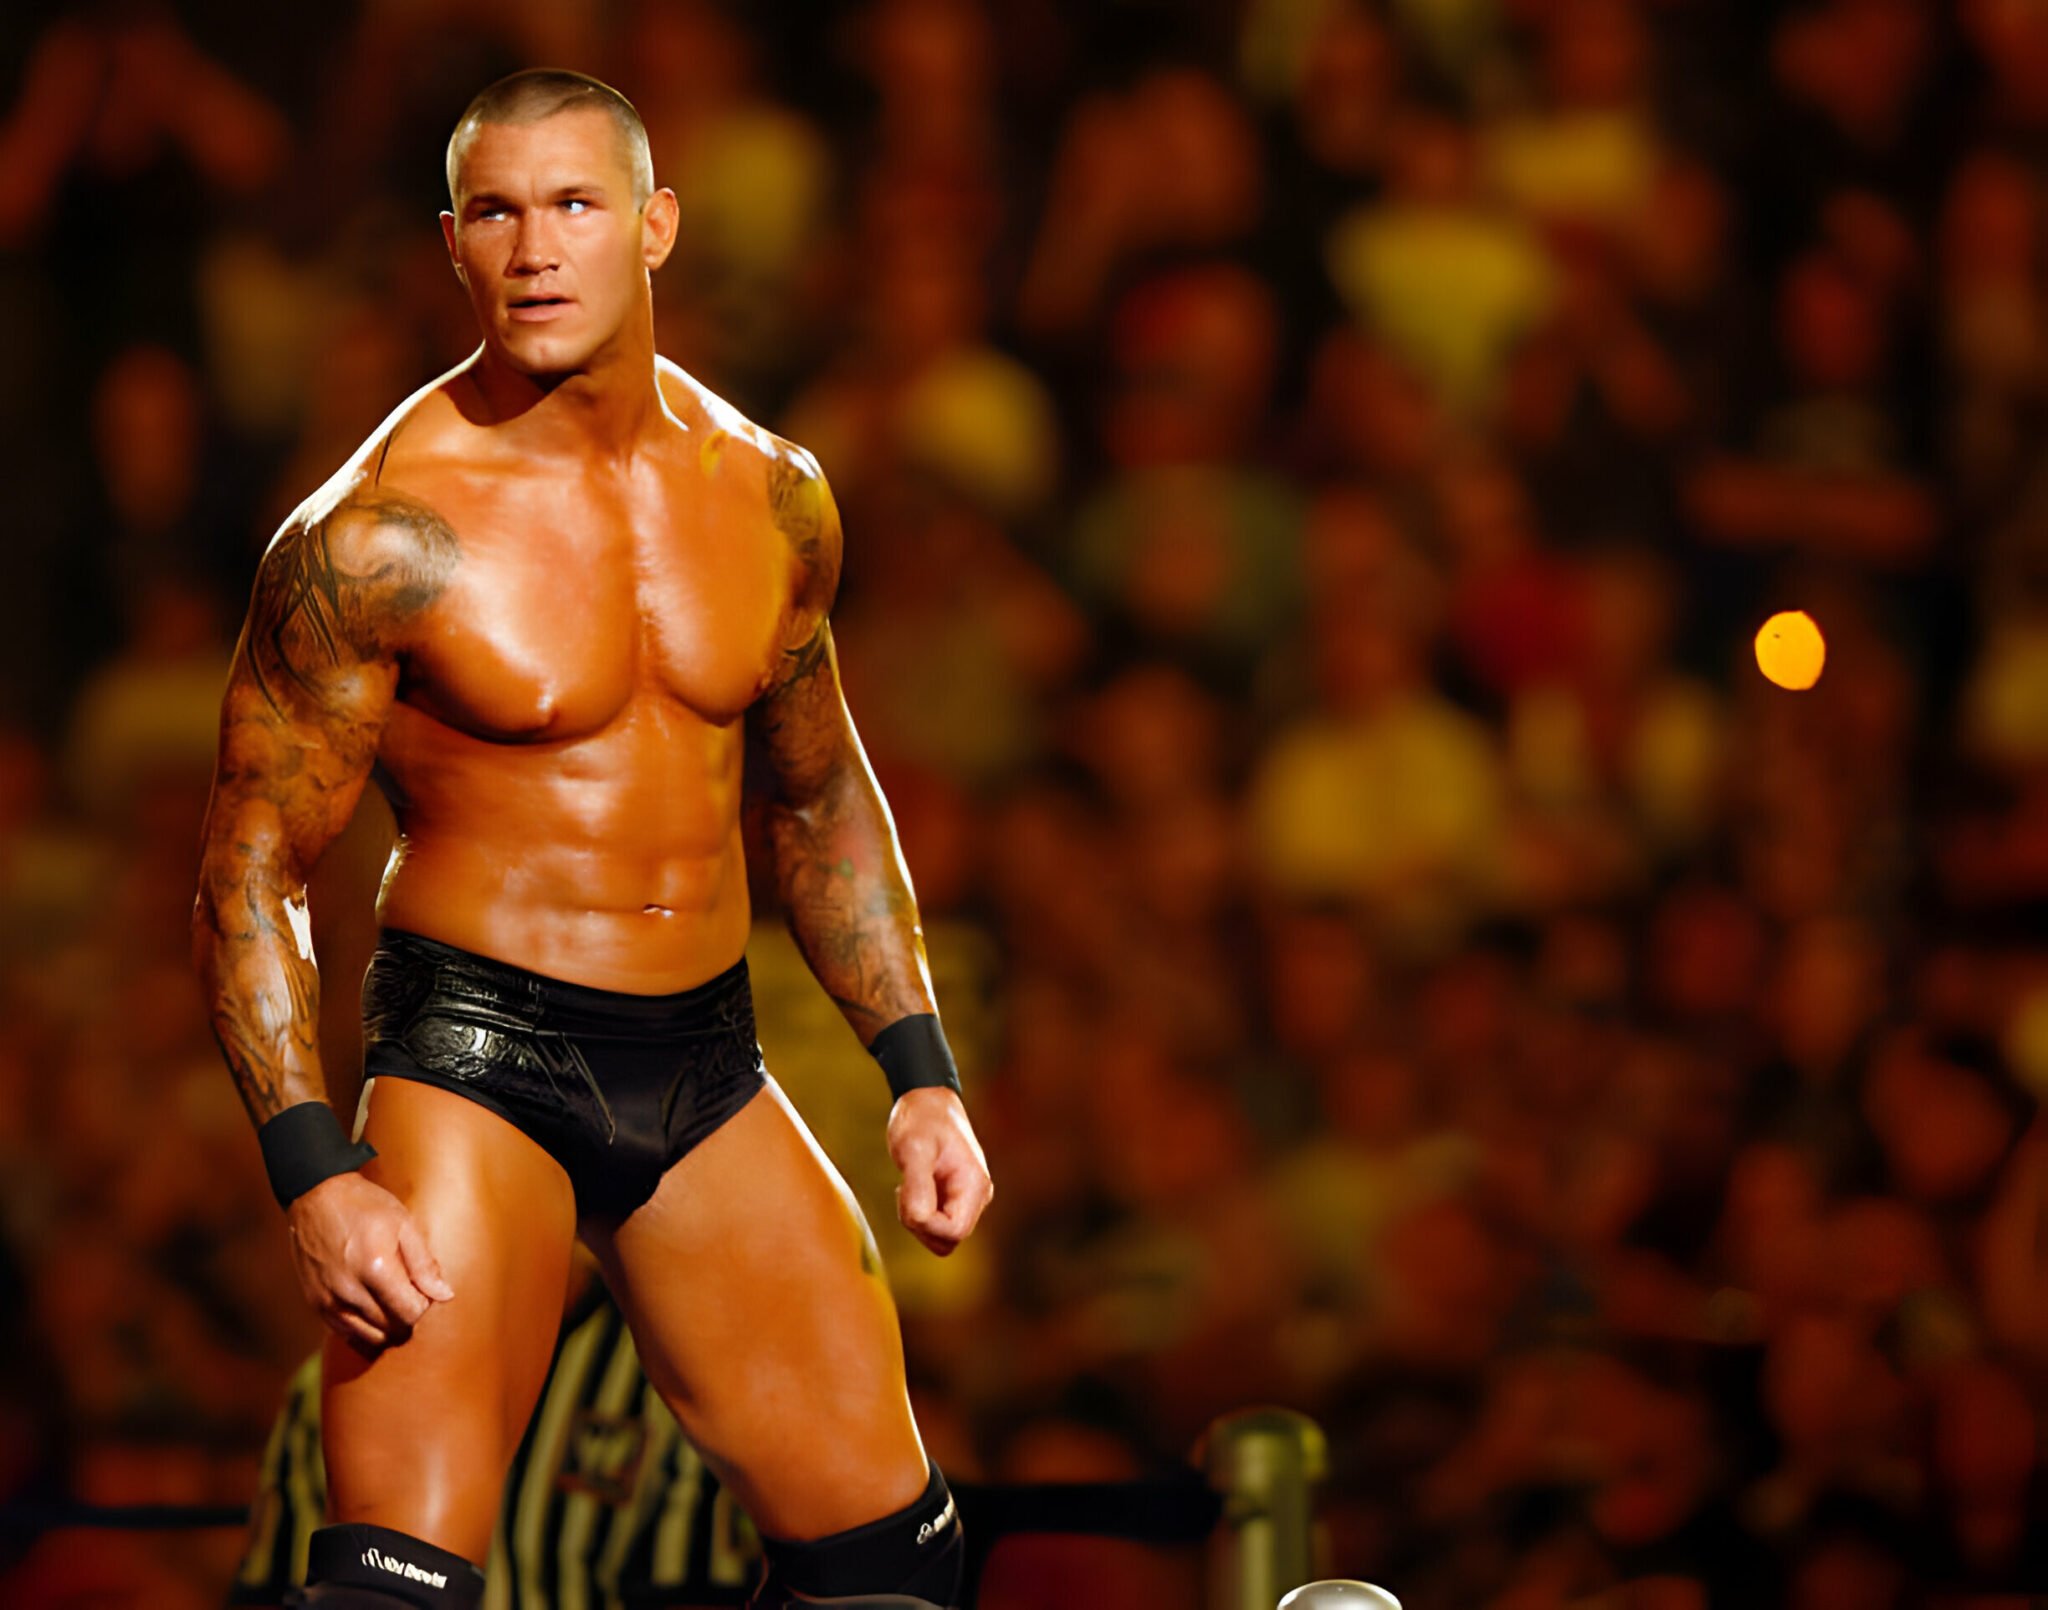 Randy Orton Aims to Surpass The Undertaker’s WrestleMania Match Record